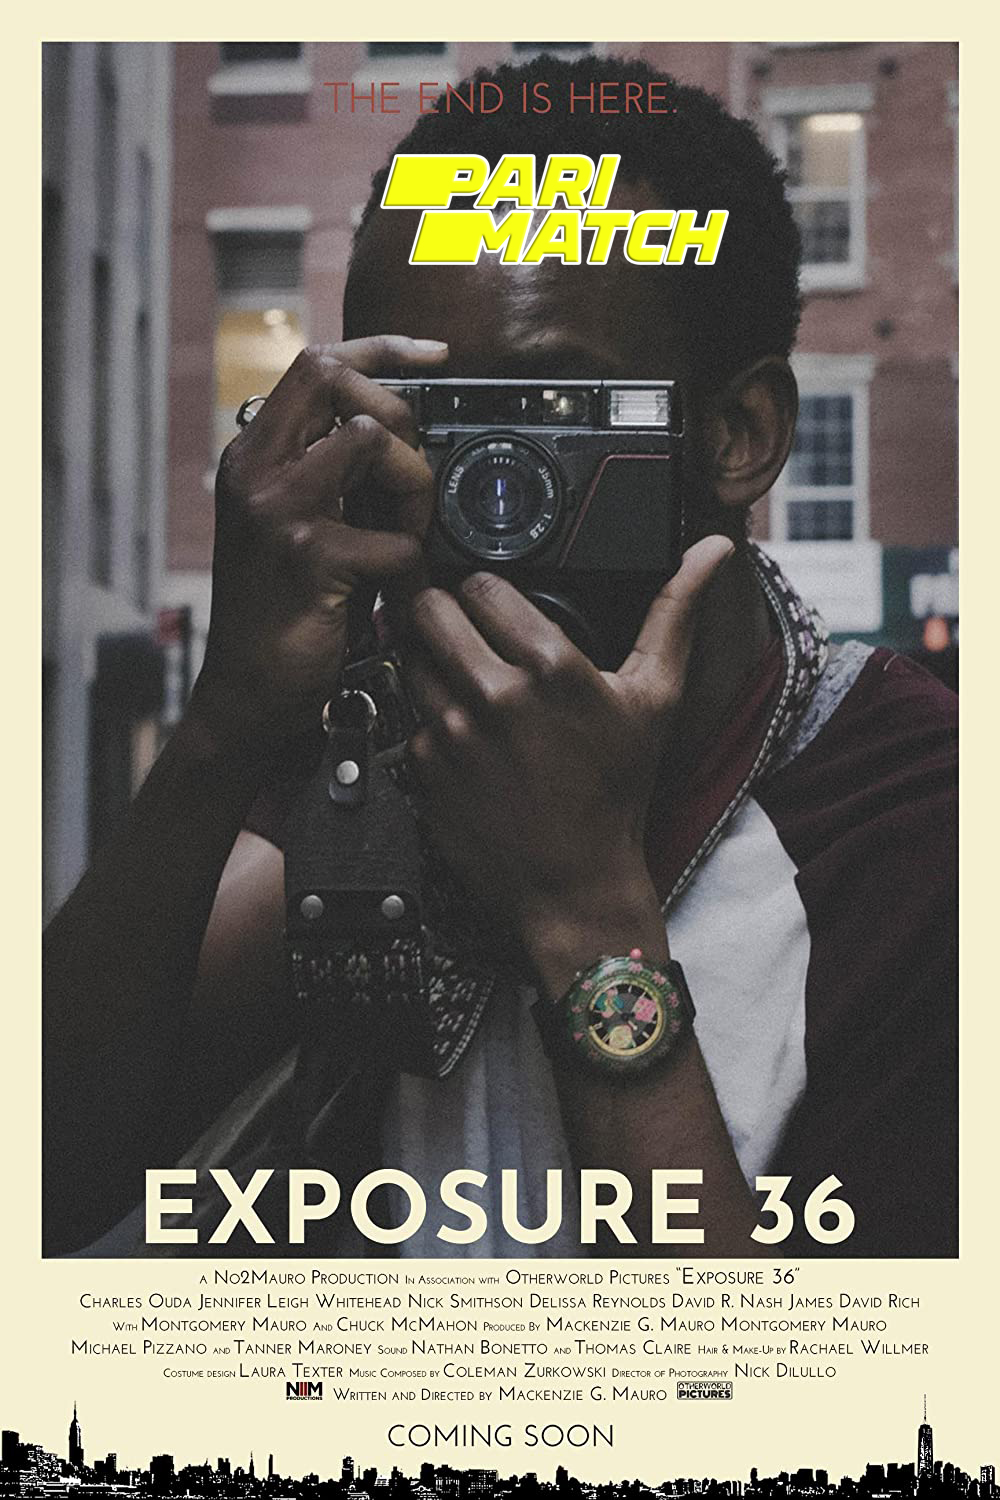 Exposure 36 (2022) Bengali Dubbed (VO) [PariMatch] 720p WEBRip 800MB Download